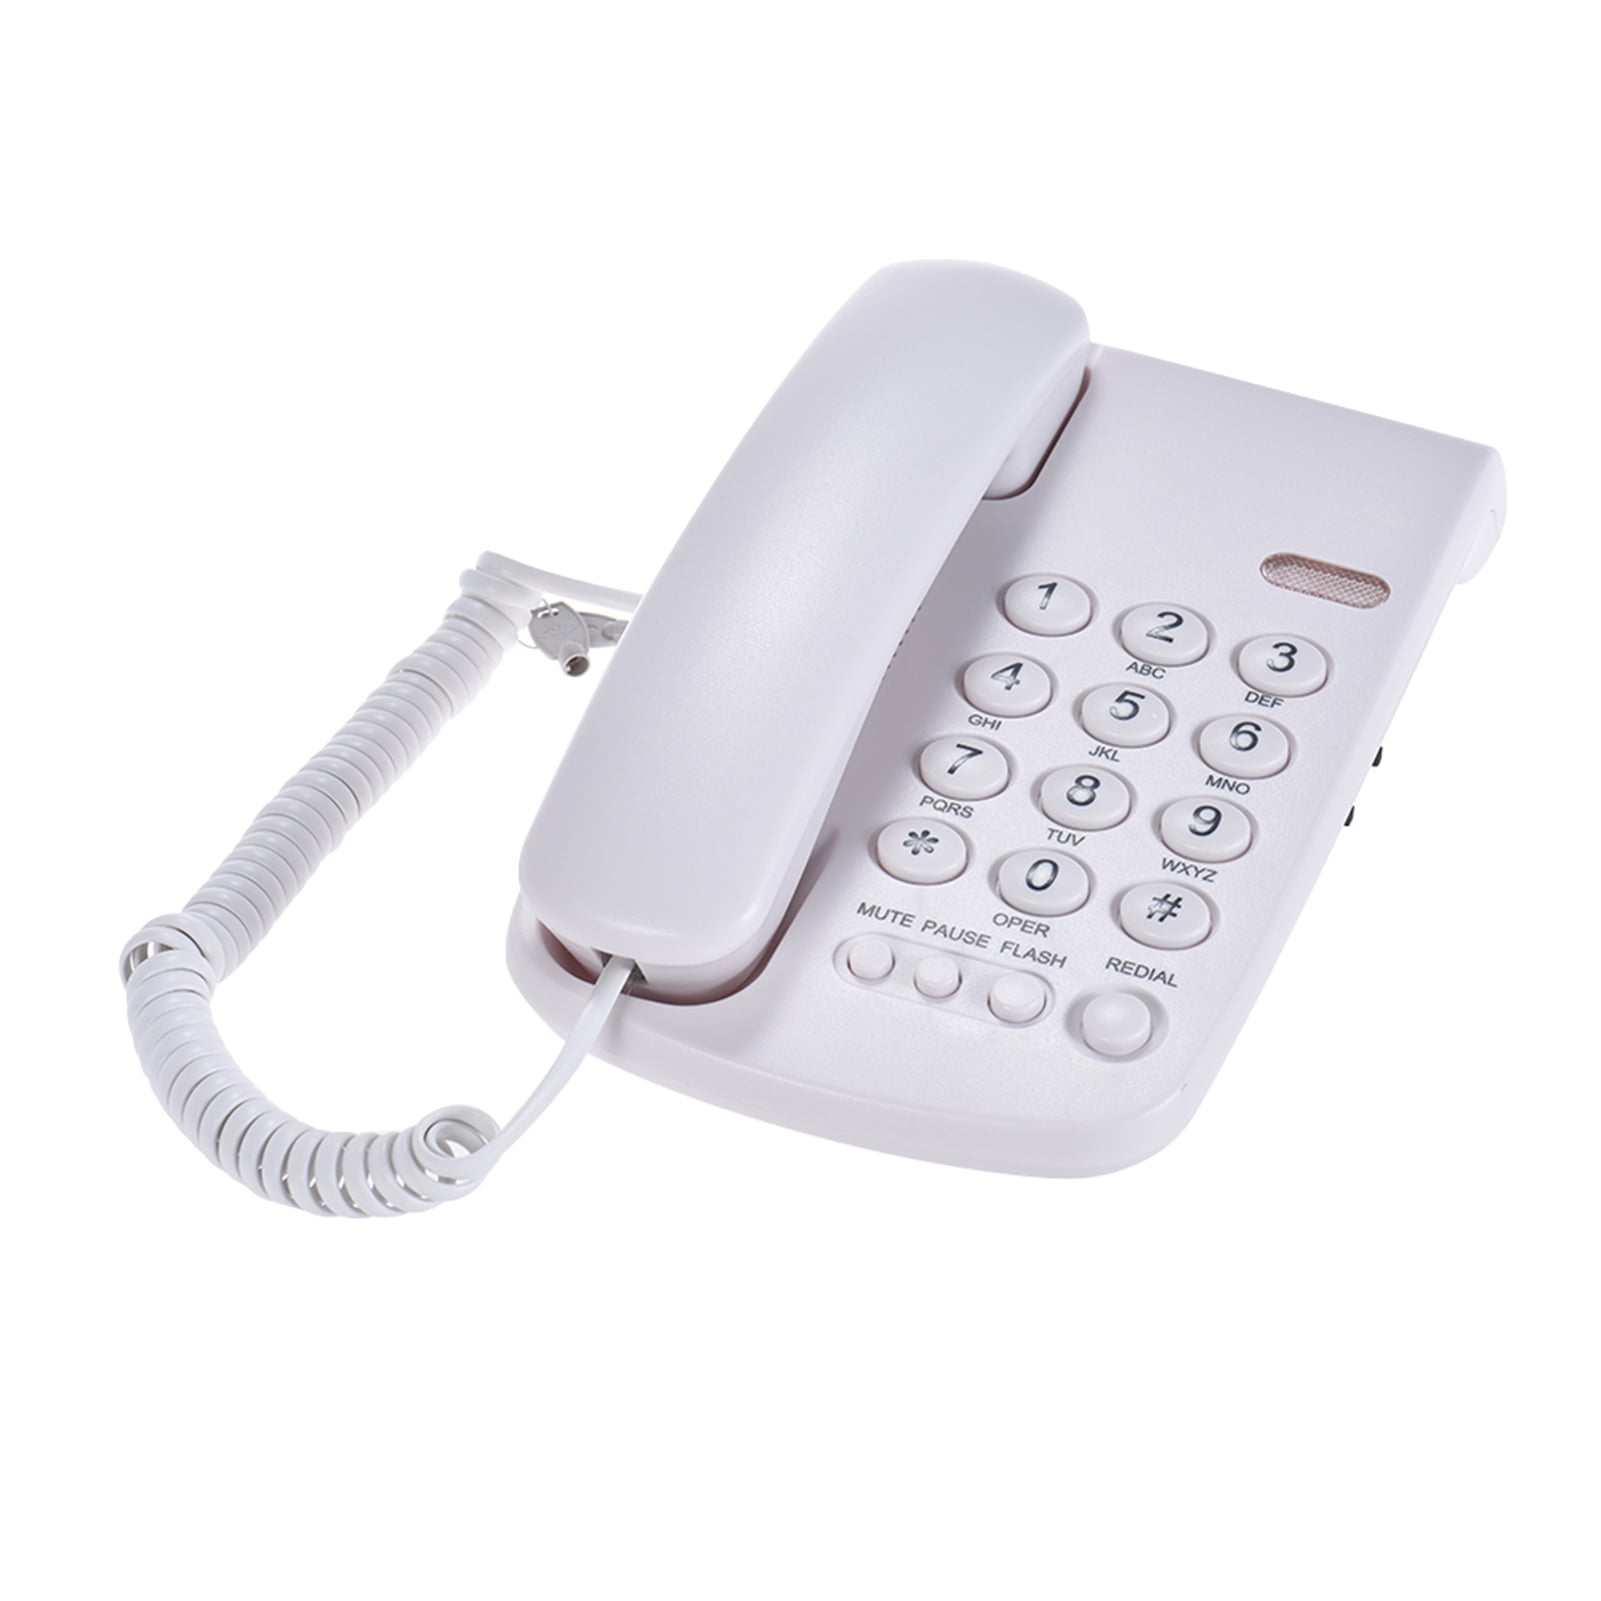 White KerLiTar K-P041 Basic Corded Phone with Redial Mute Function Landline Telephone